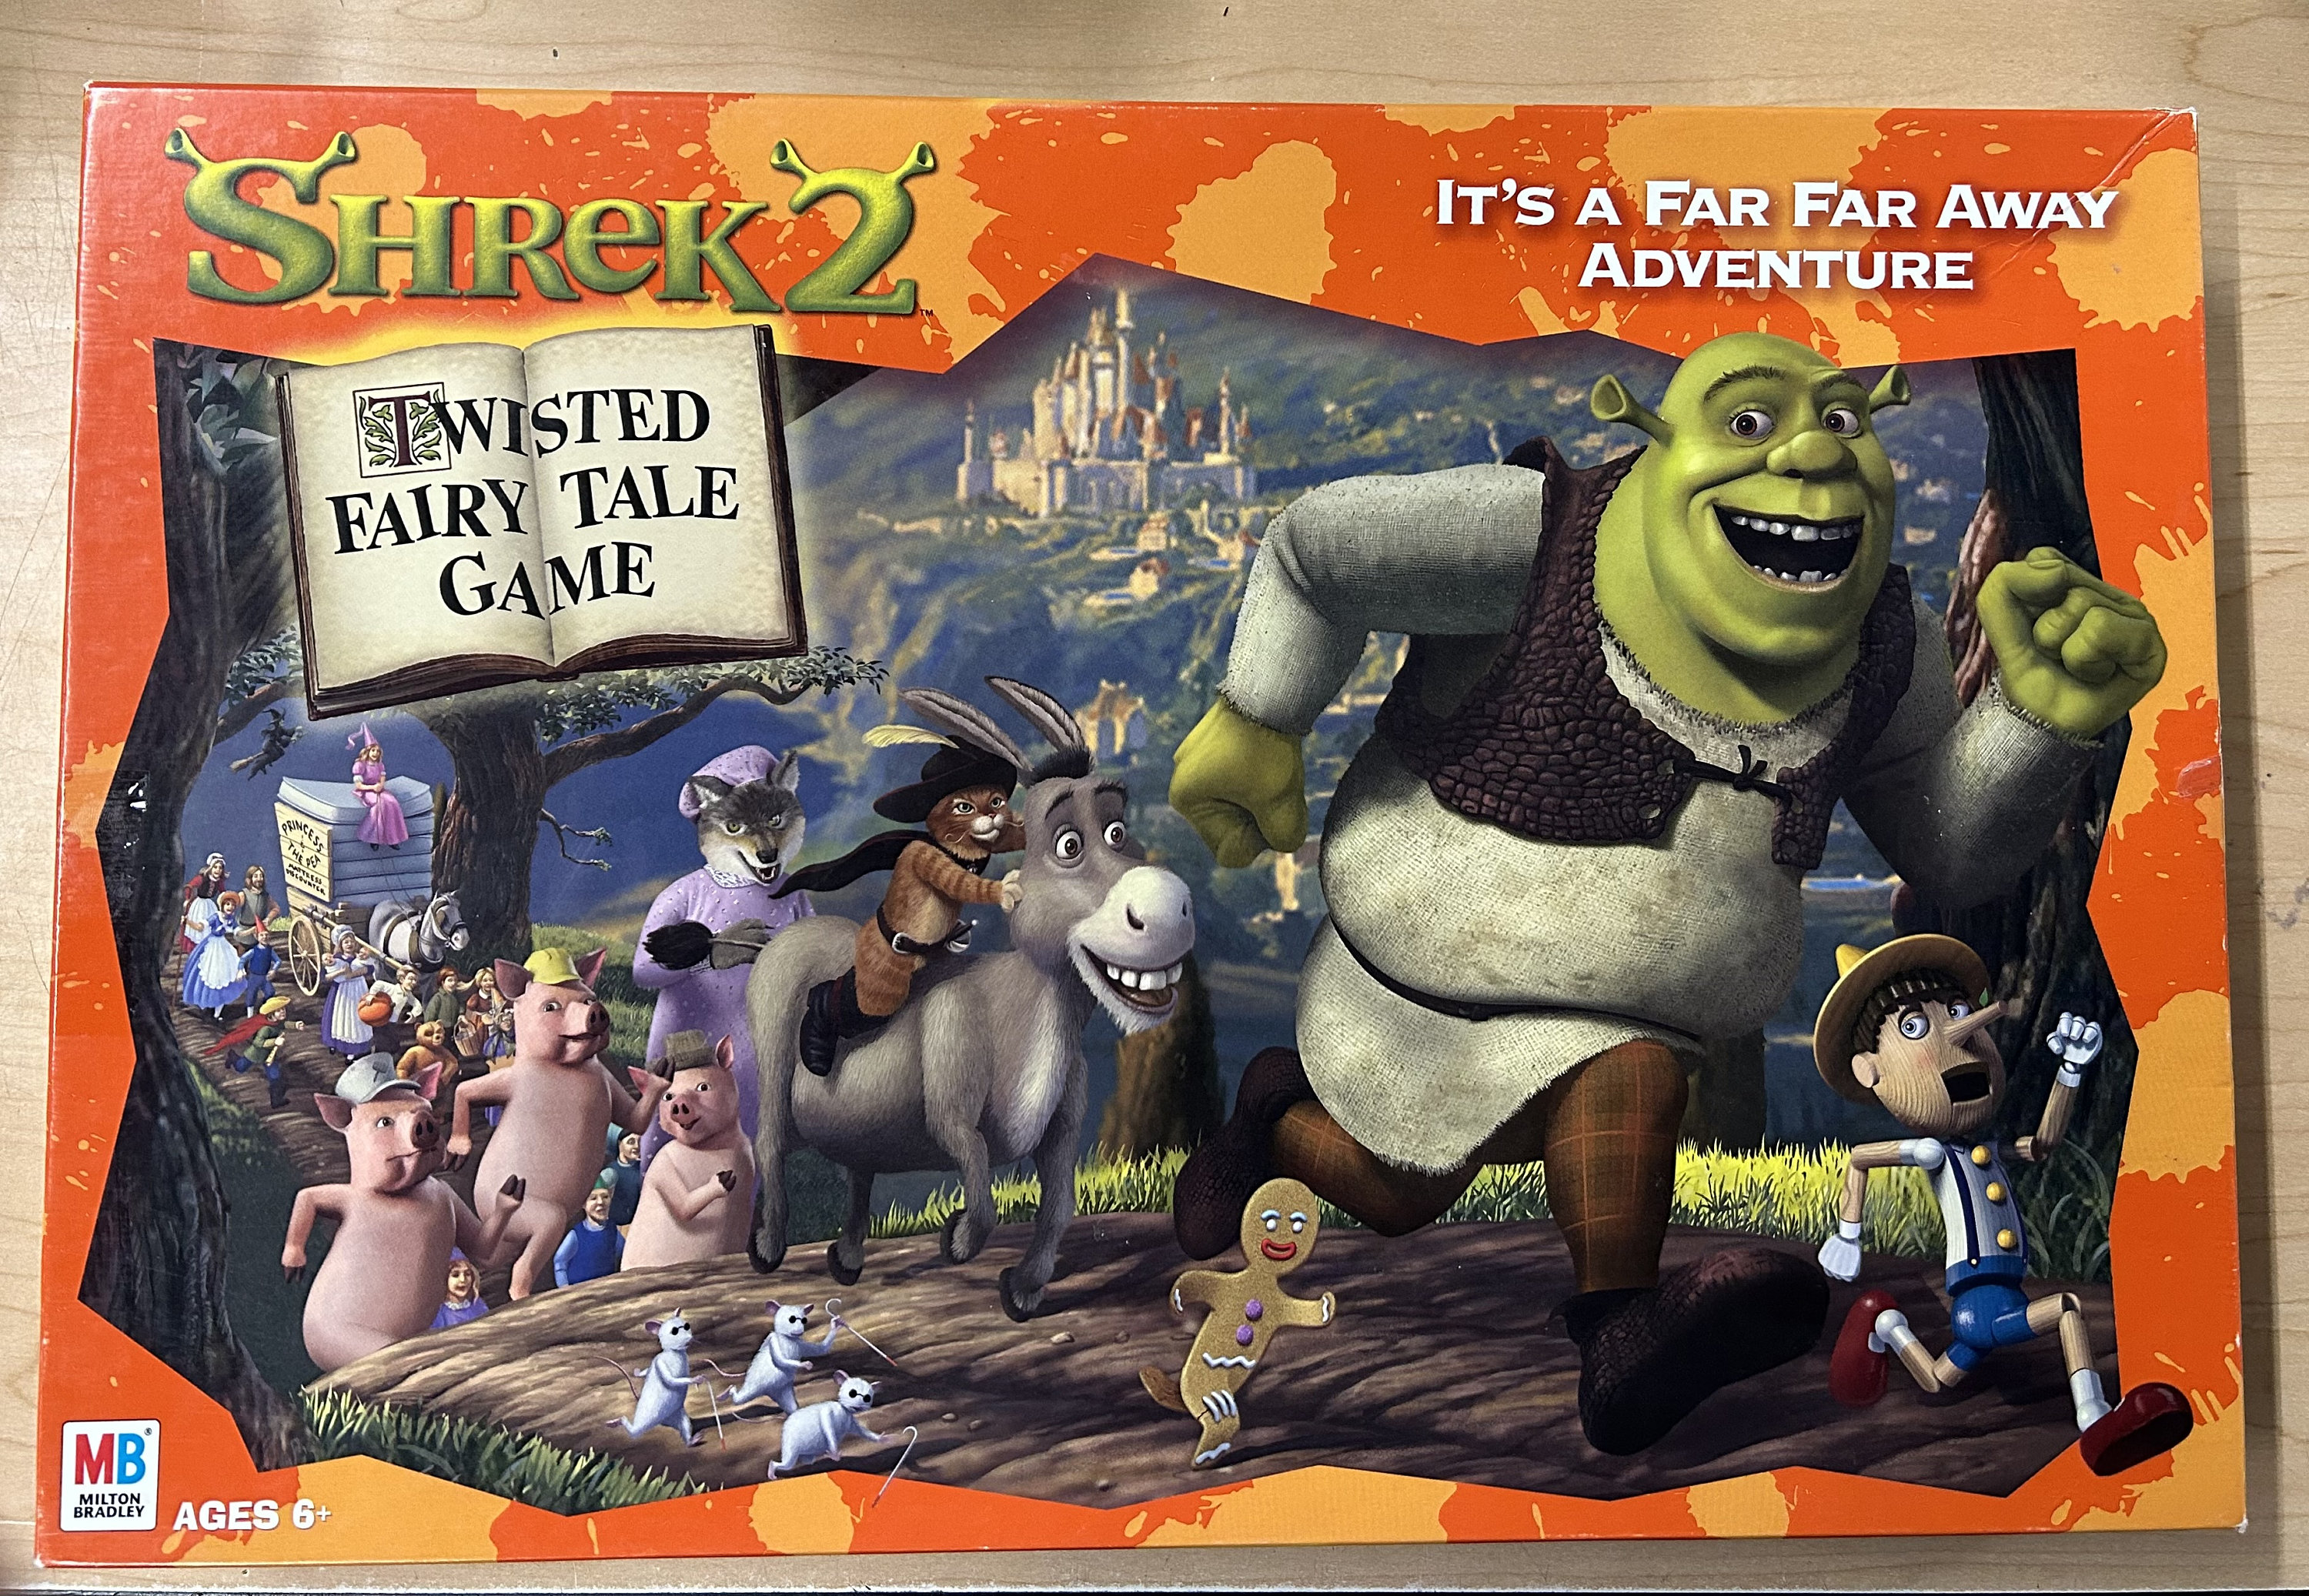 UNO: Shrek 2, Board Game